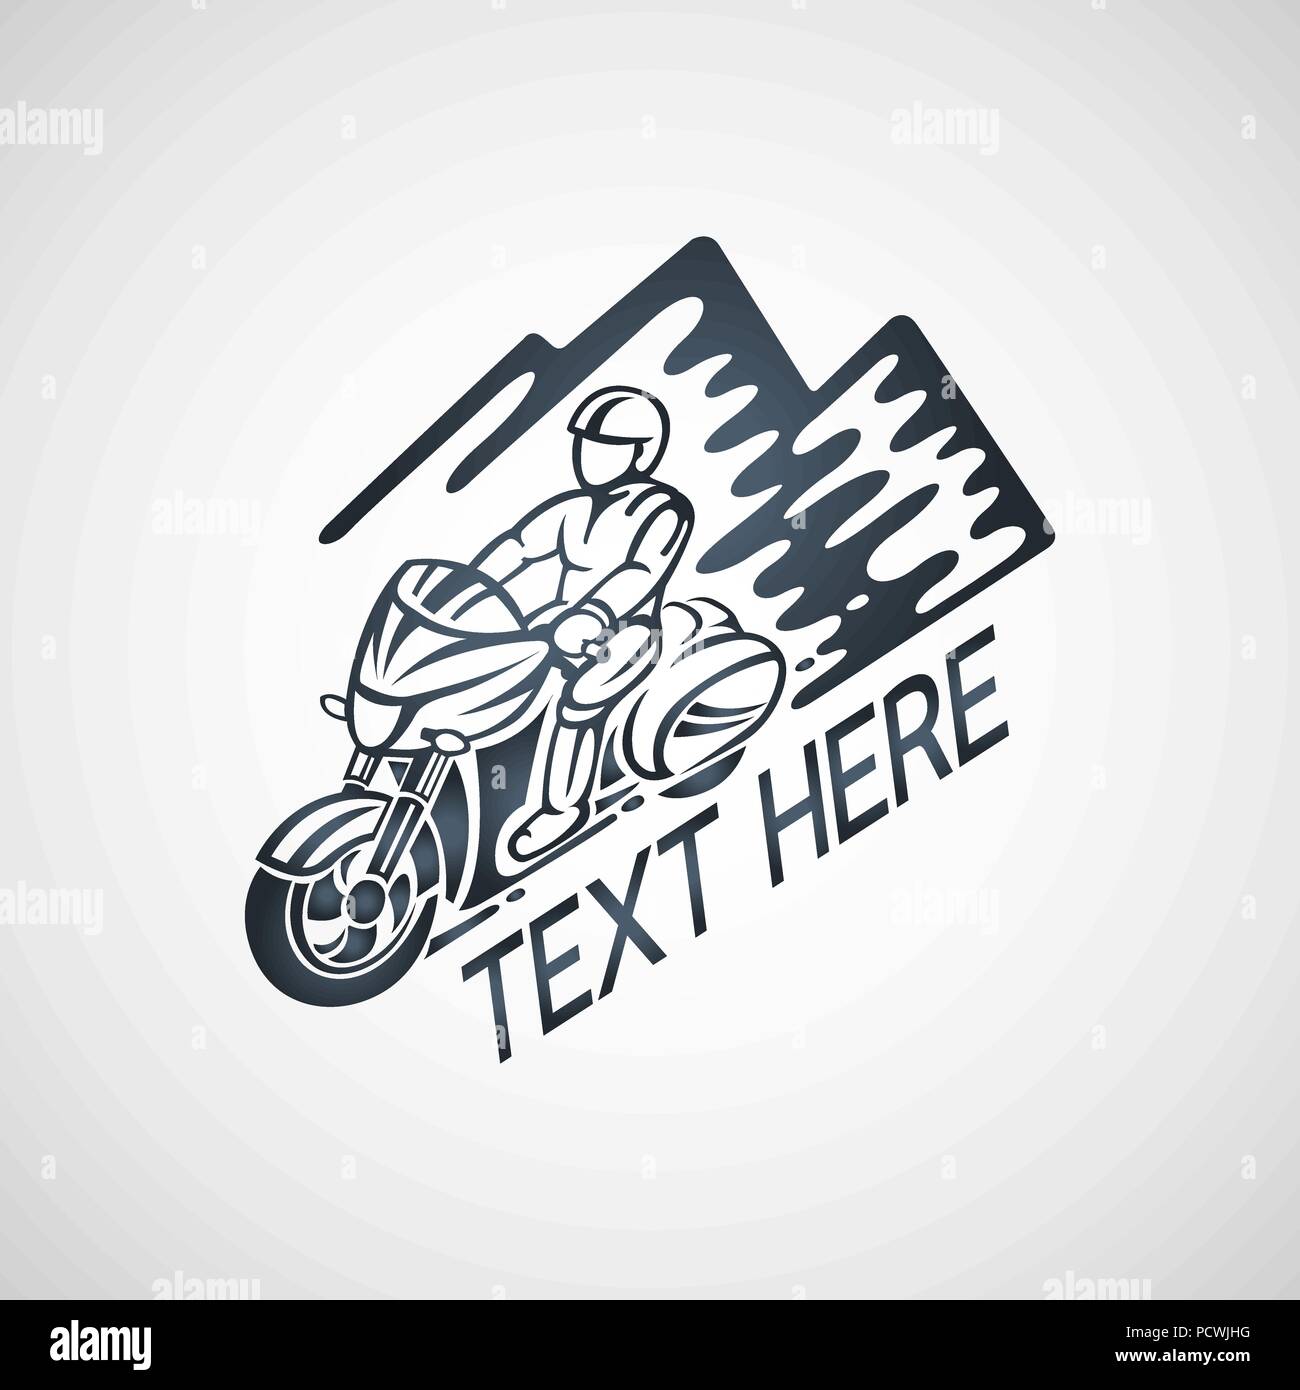 touring motorcycle club vector logo illustration Stock Vector